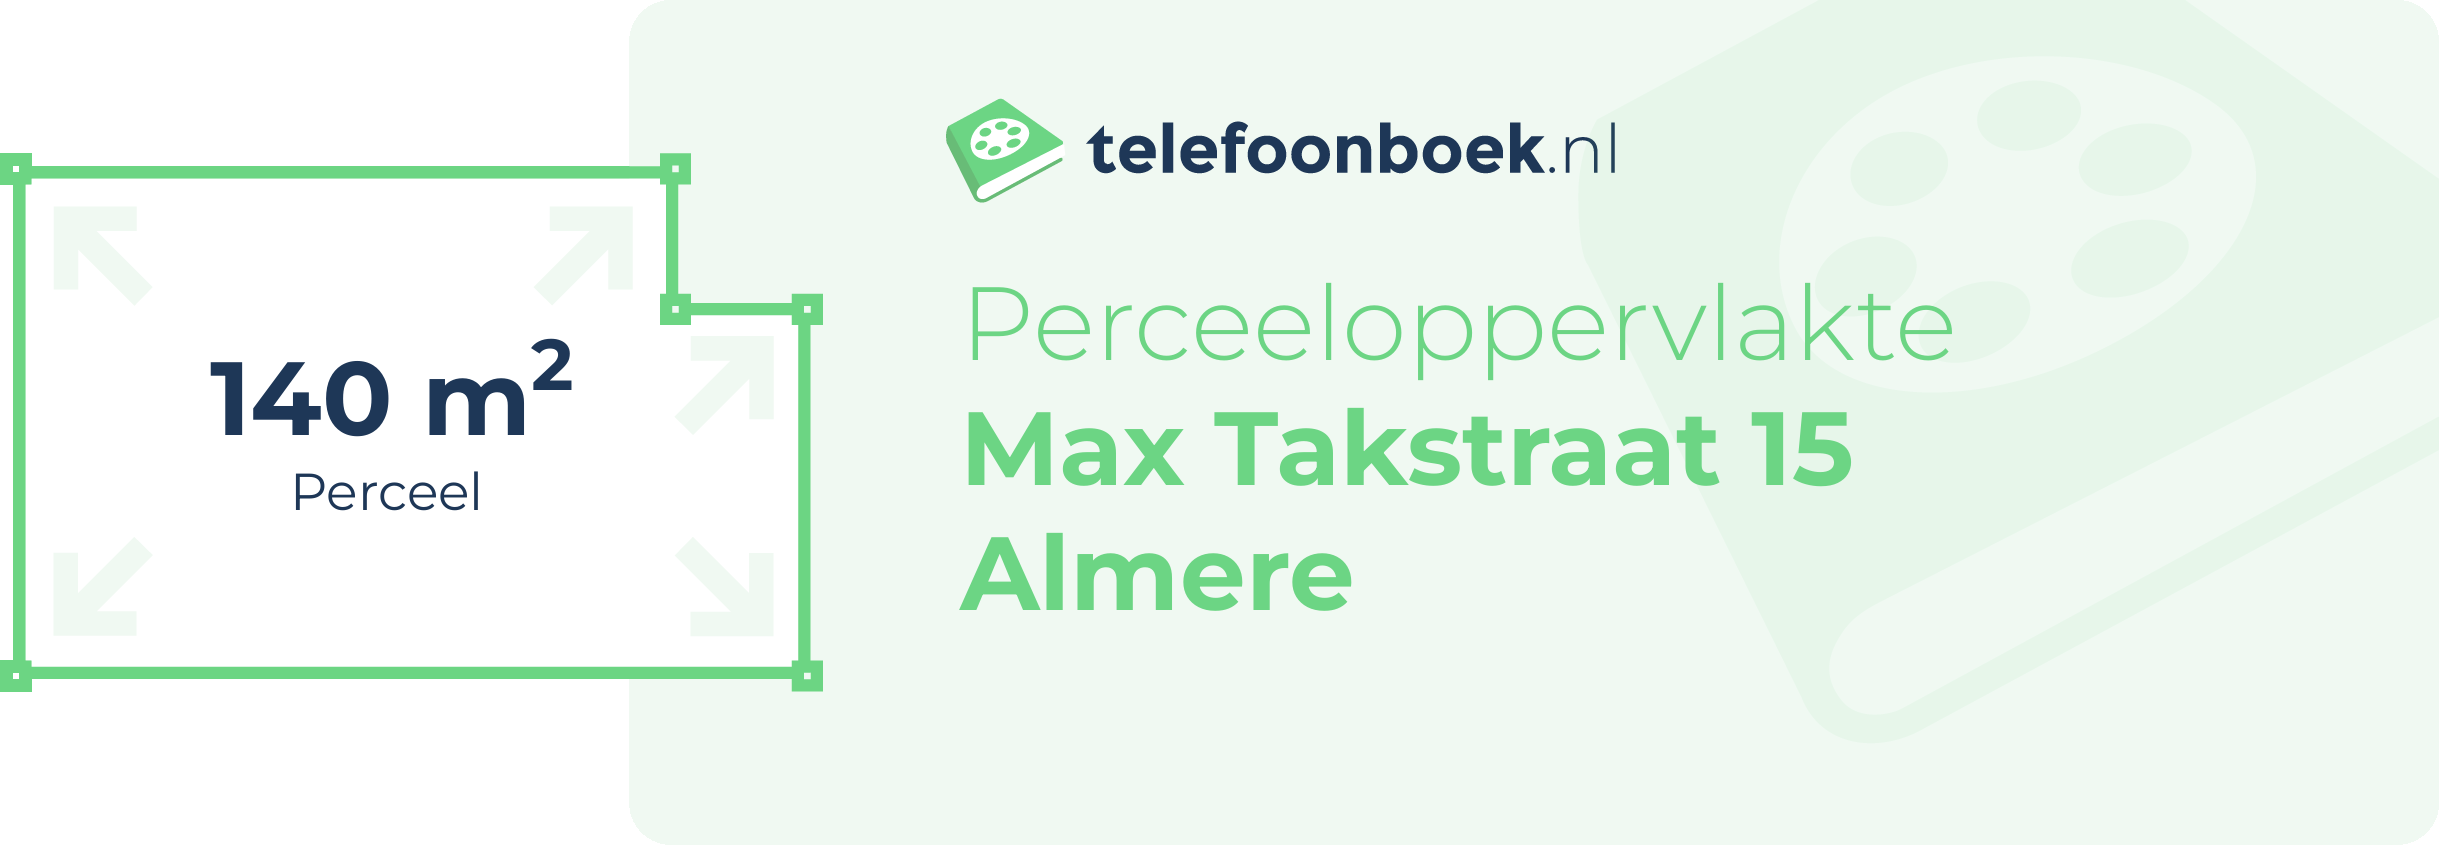 Perceeloppervlakte Max Takstraat 15 Almere